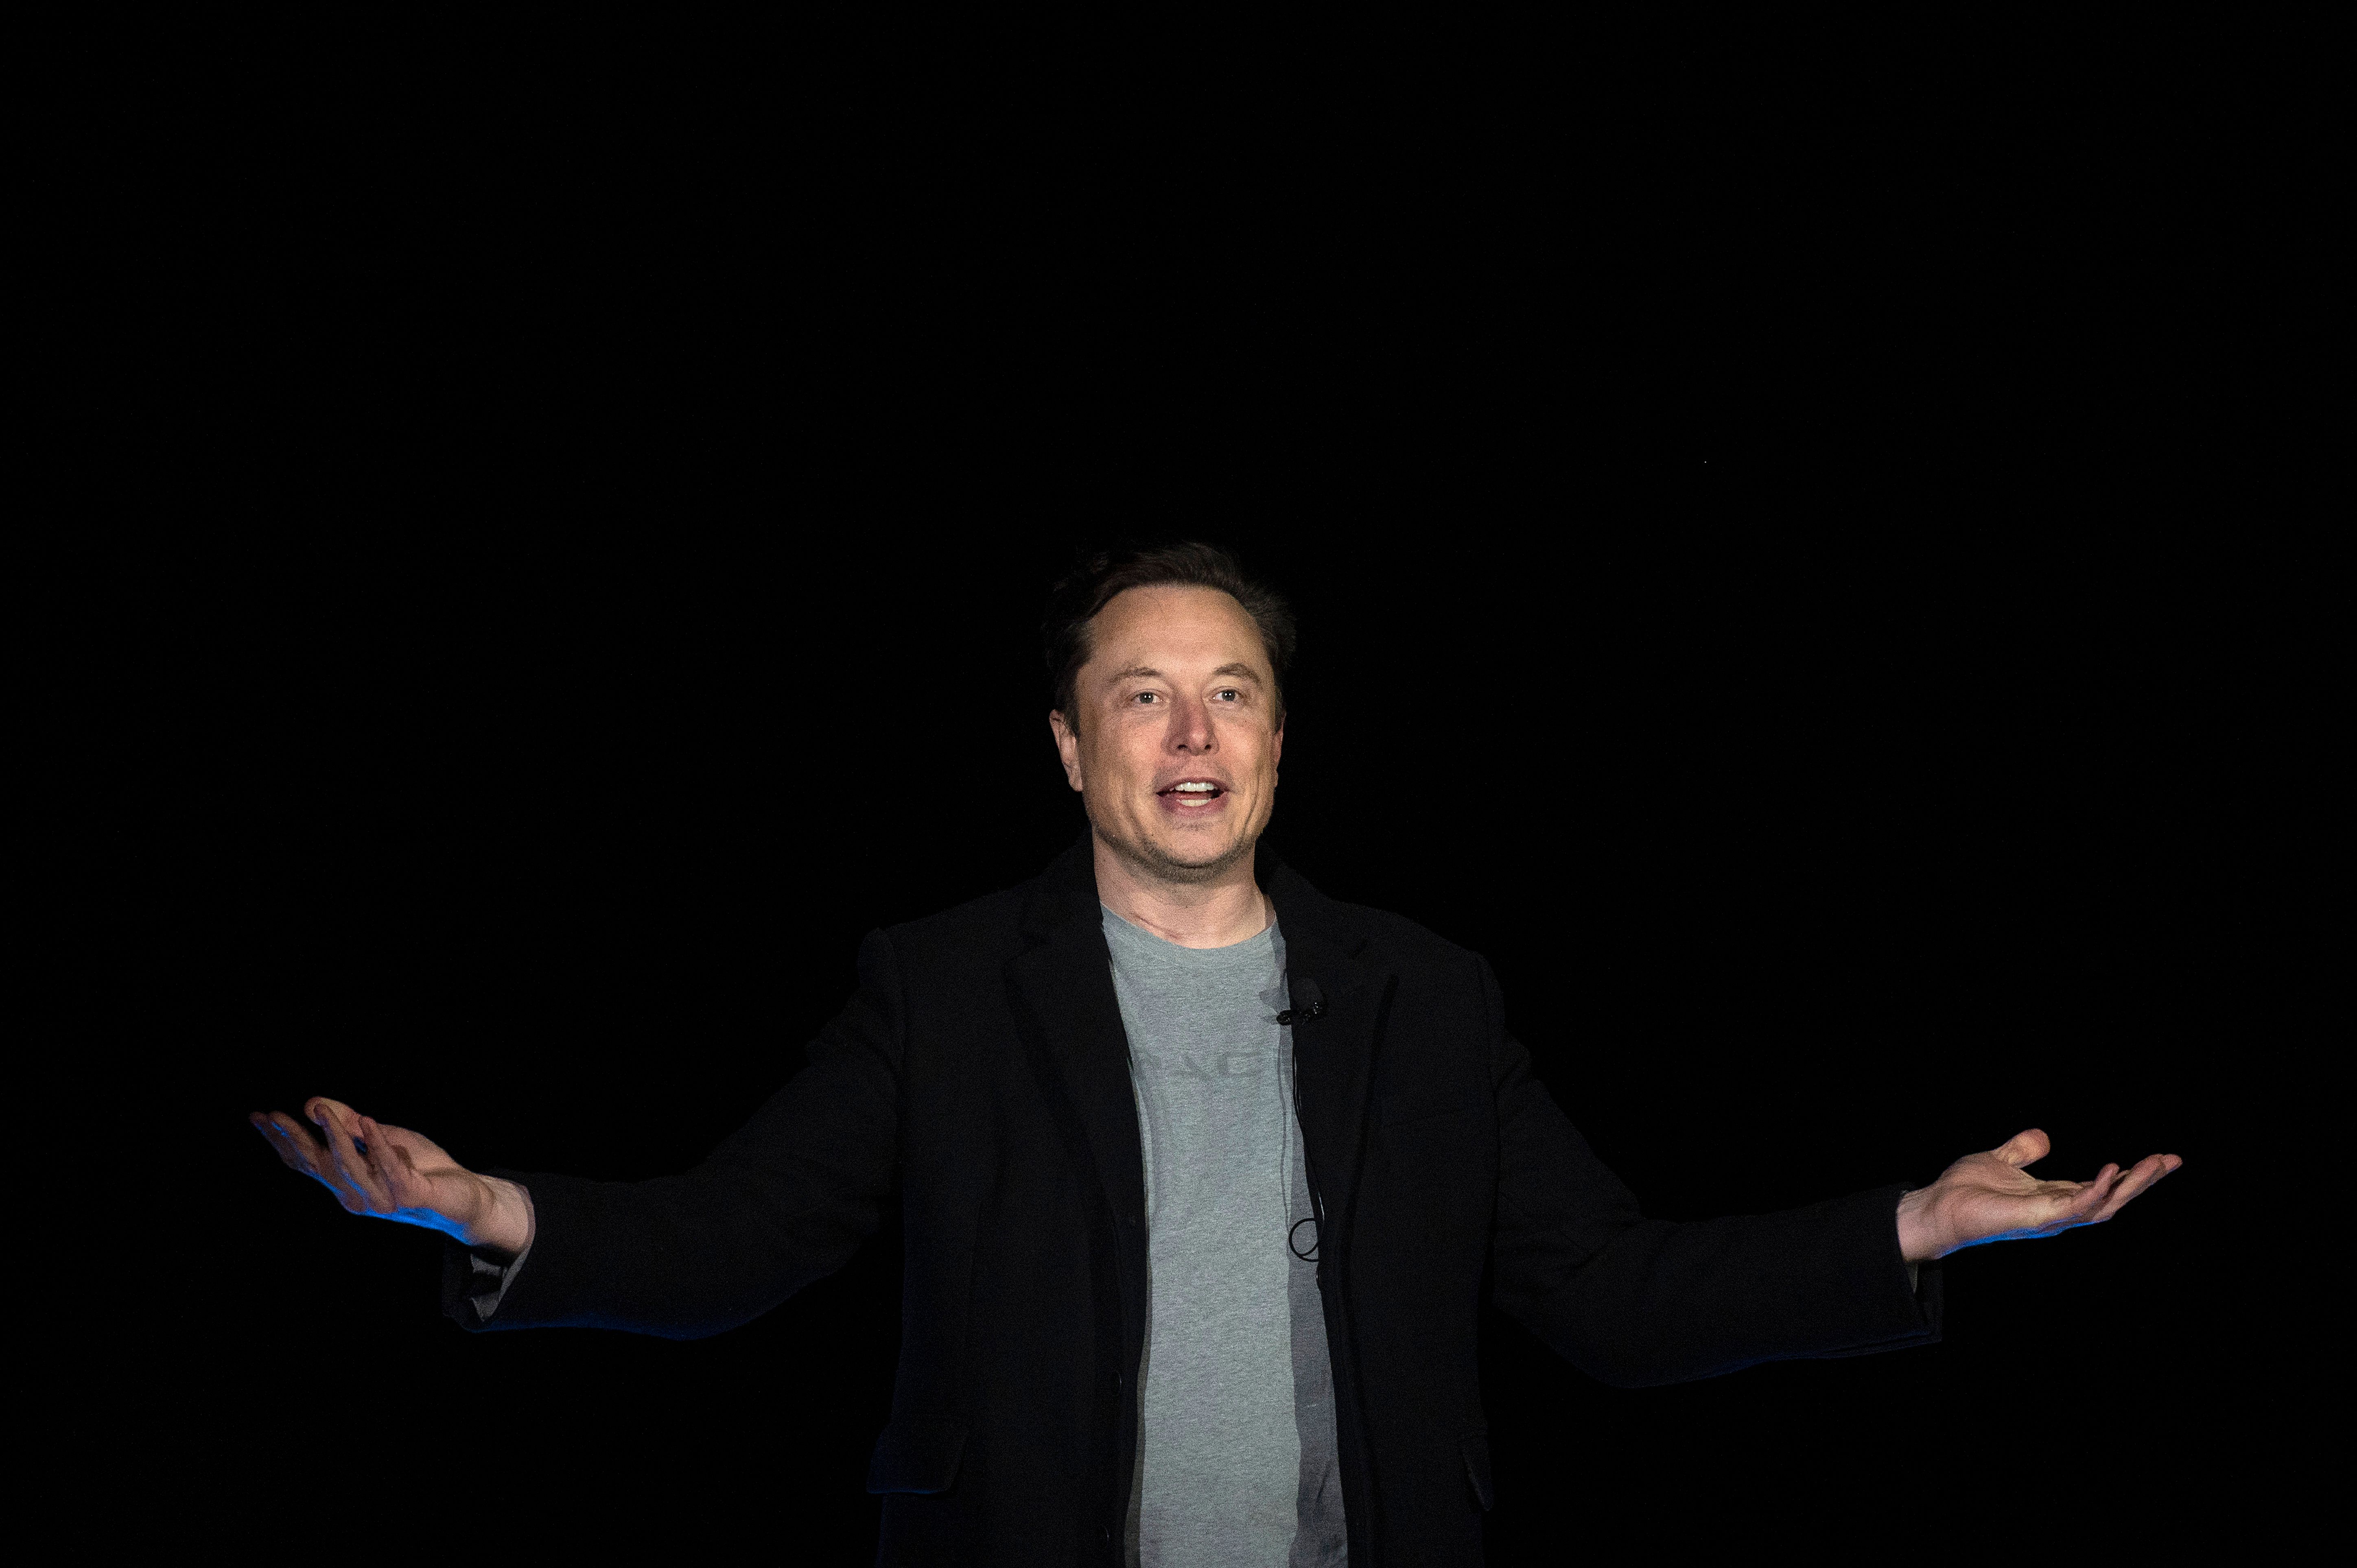 Elon Musk is hiring after the Boring Company raises $675 million